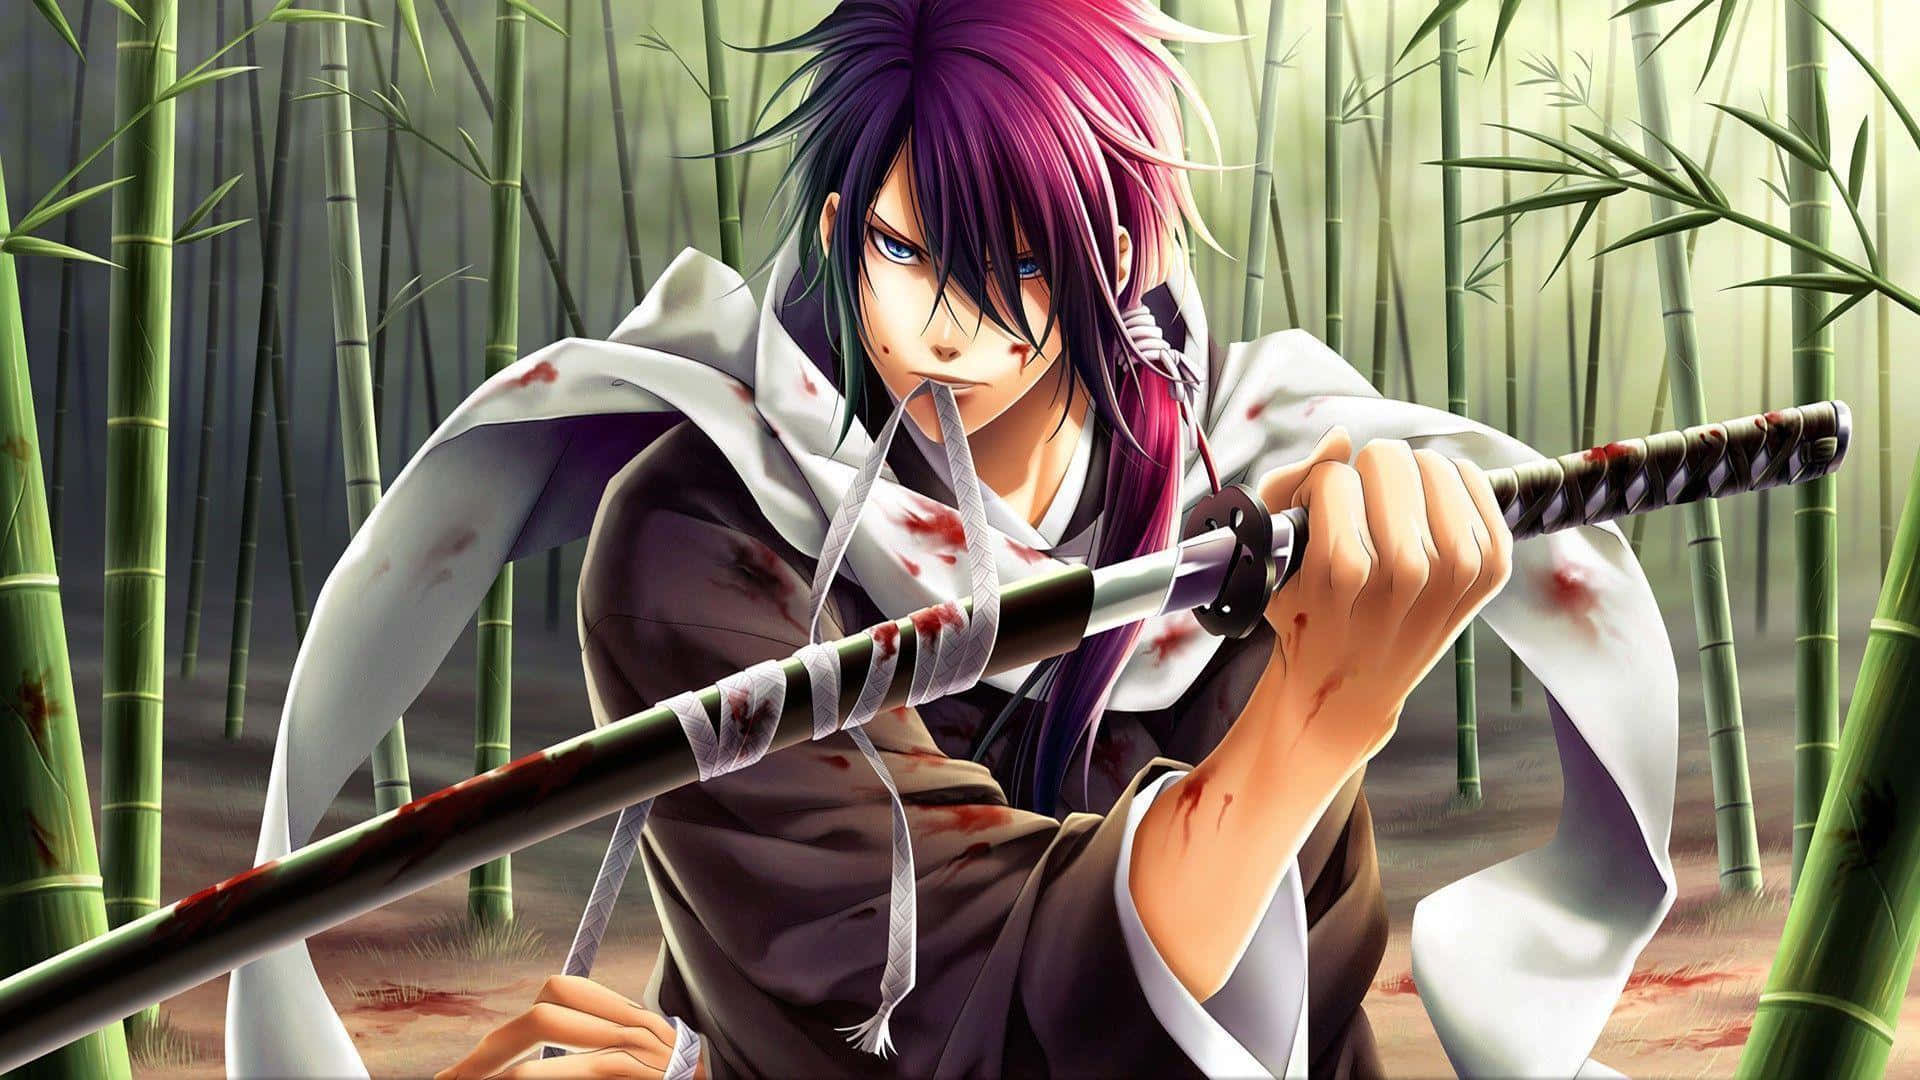 Kenshin Himura defends Japan with his legendary reverse blade sword